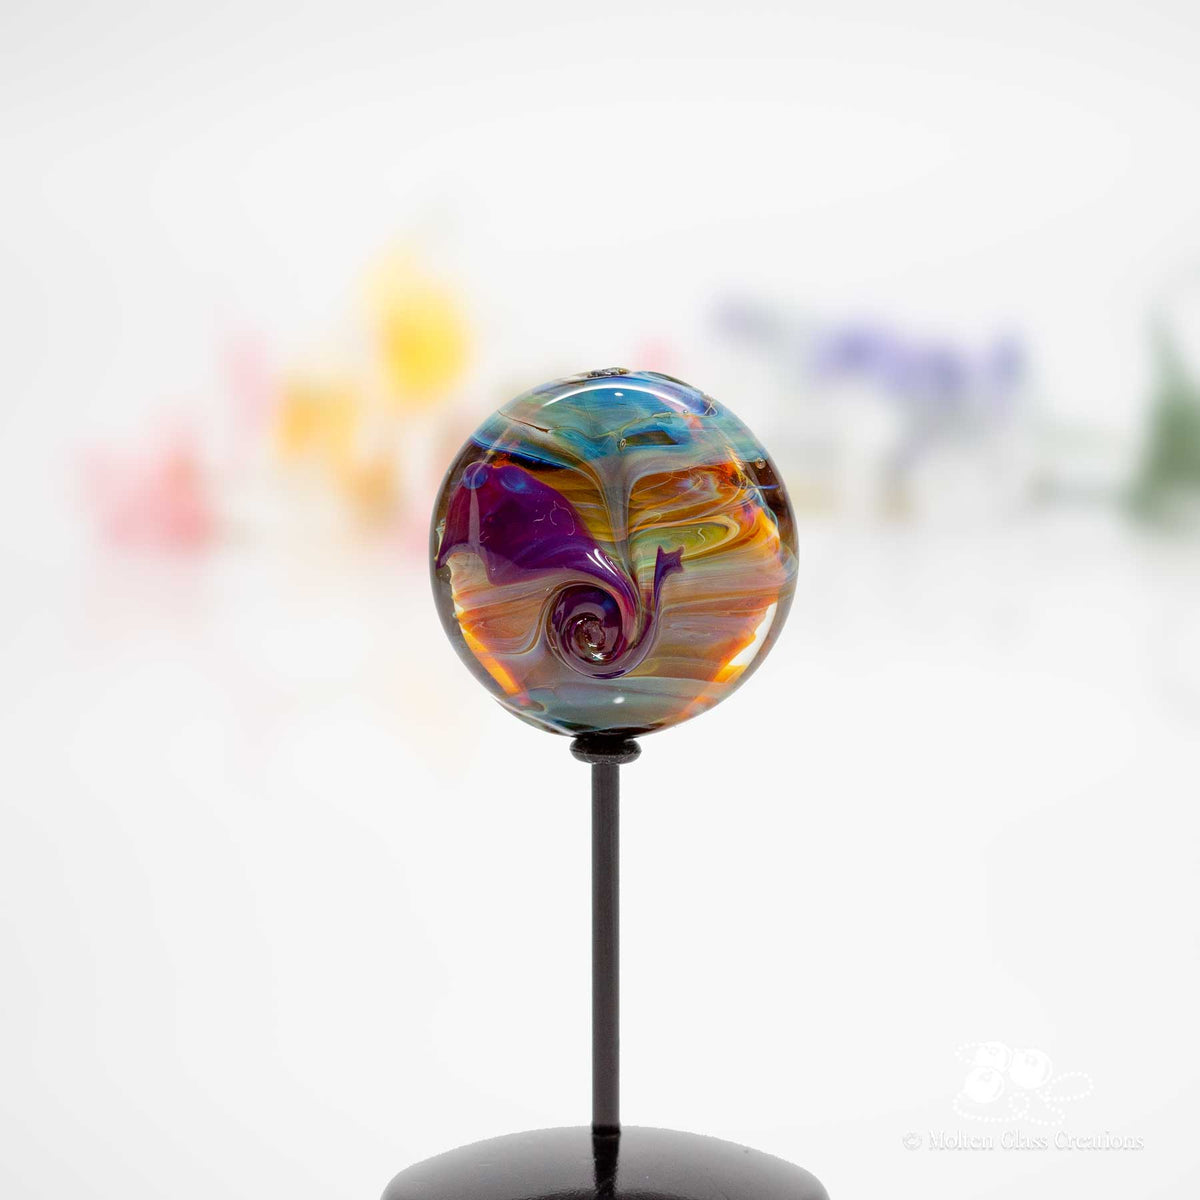 Focal Bead - Multicolor Swirls - Molten Glass Creations